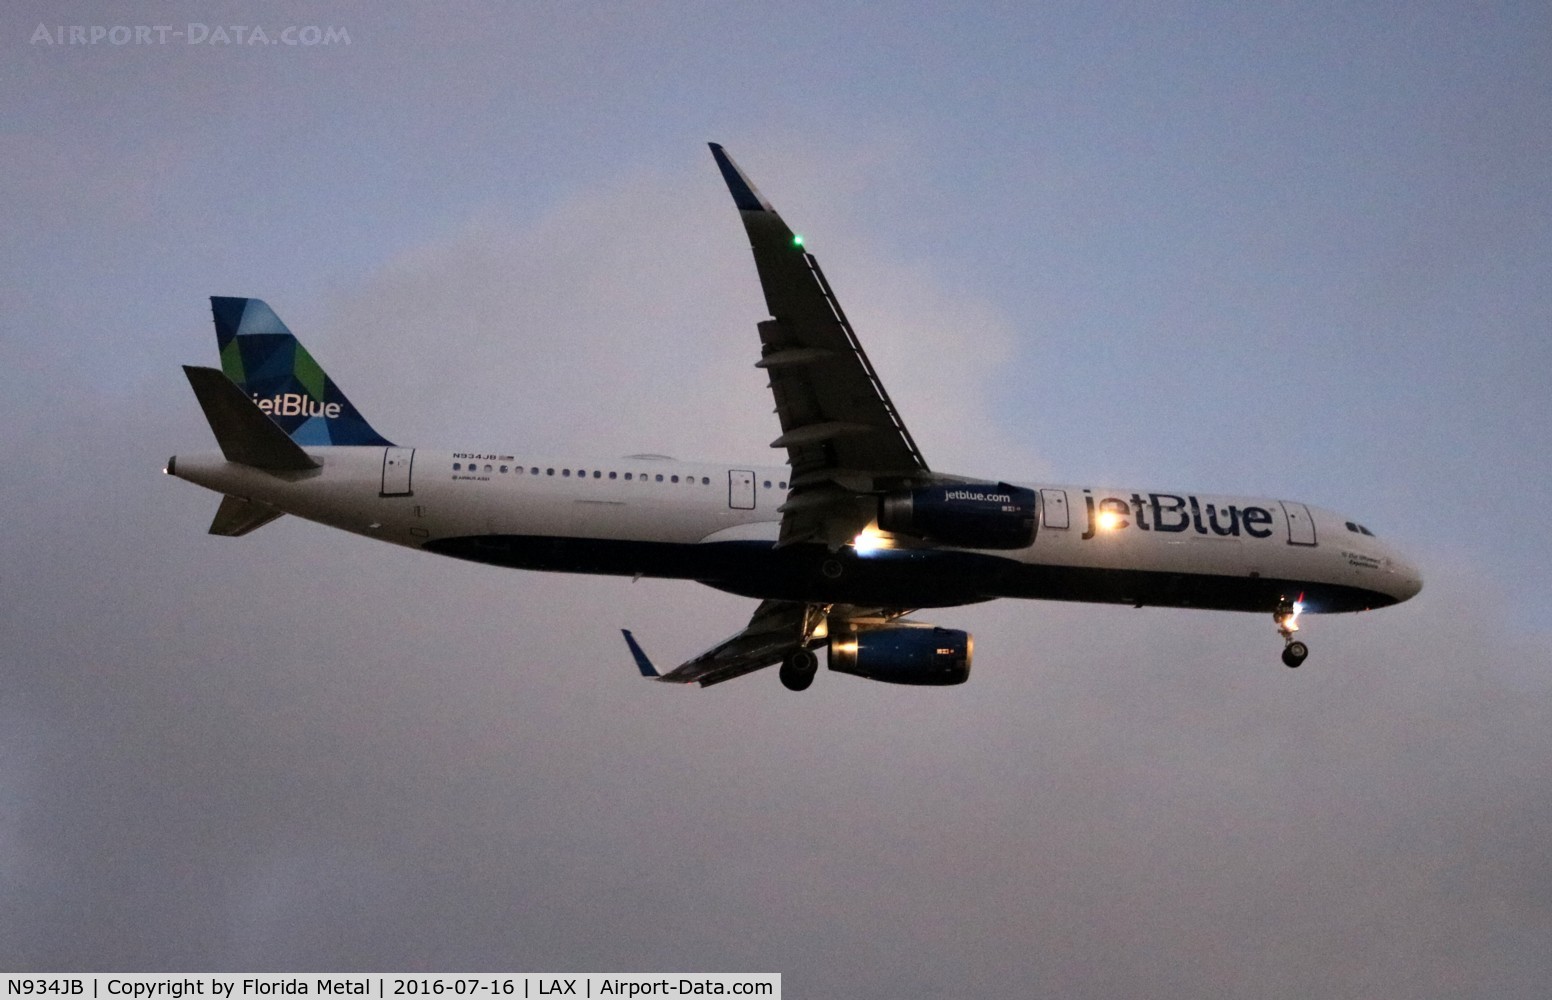 N934JB, 2014 Airbus A321-231 C/N 6130, Jet Blue